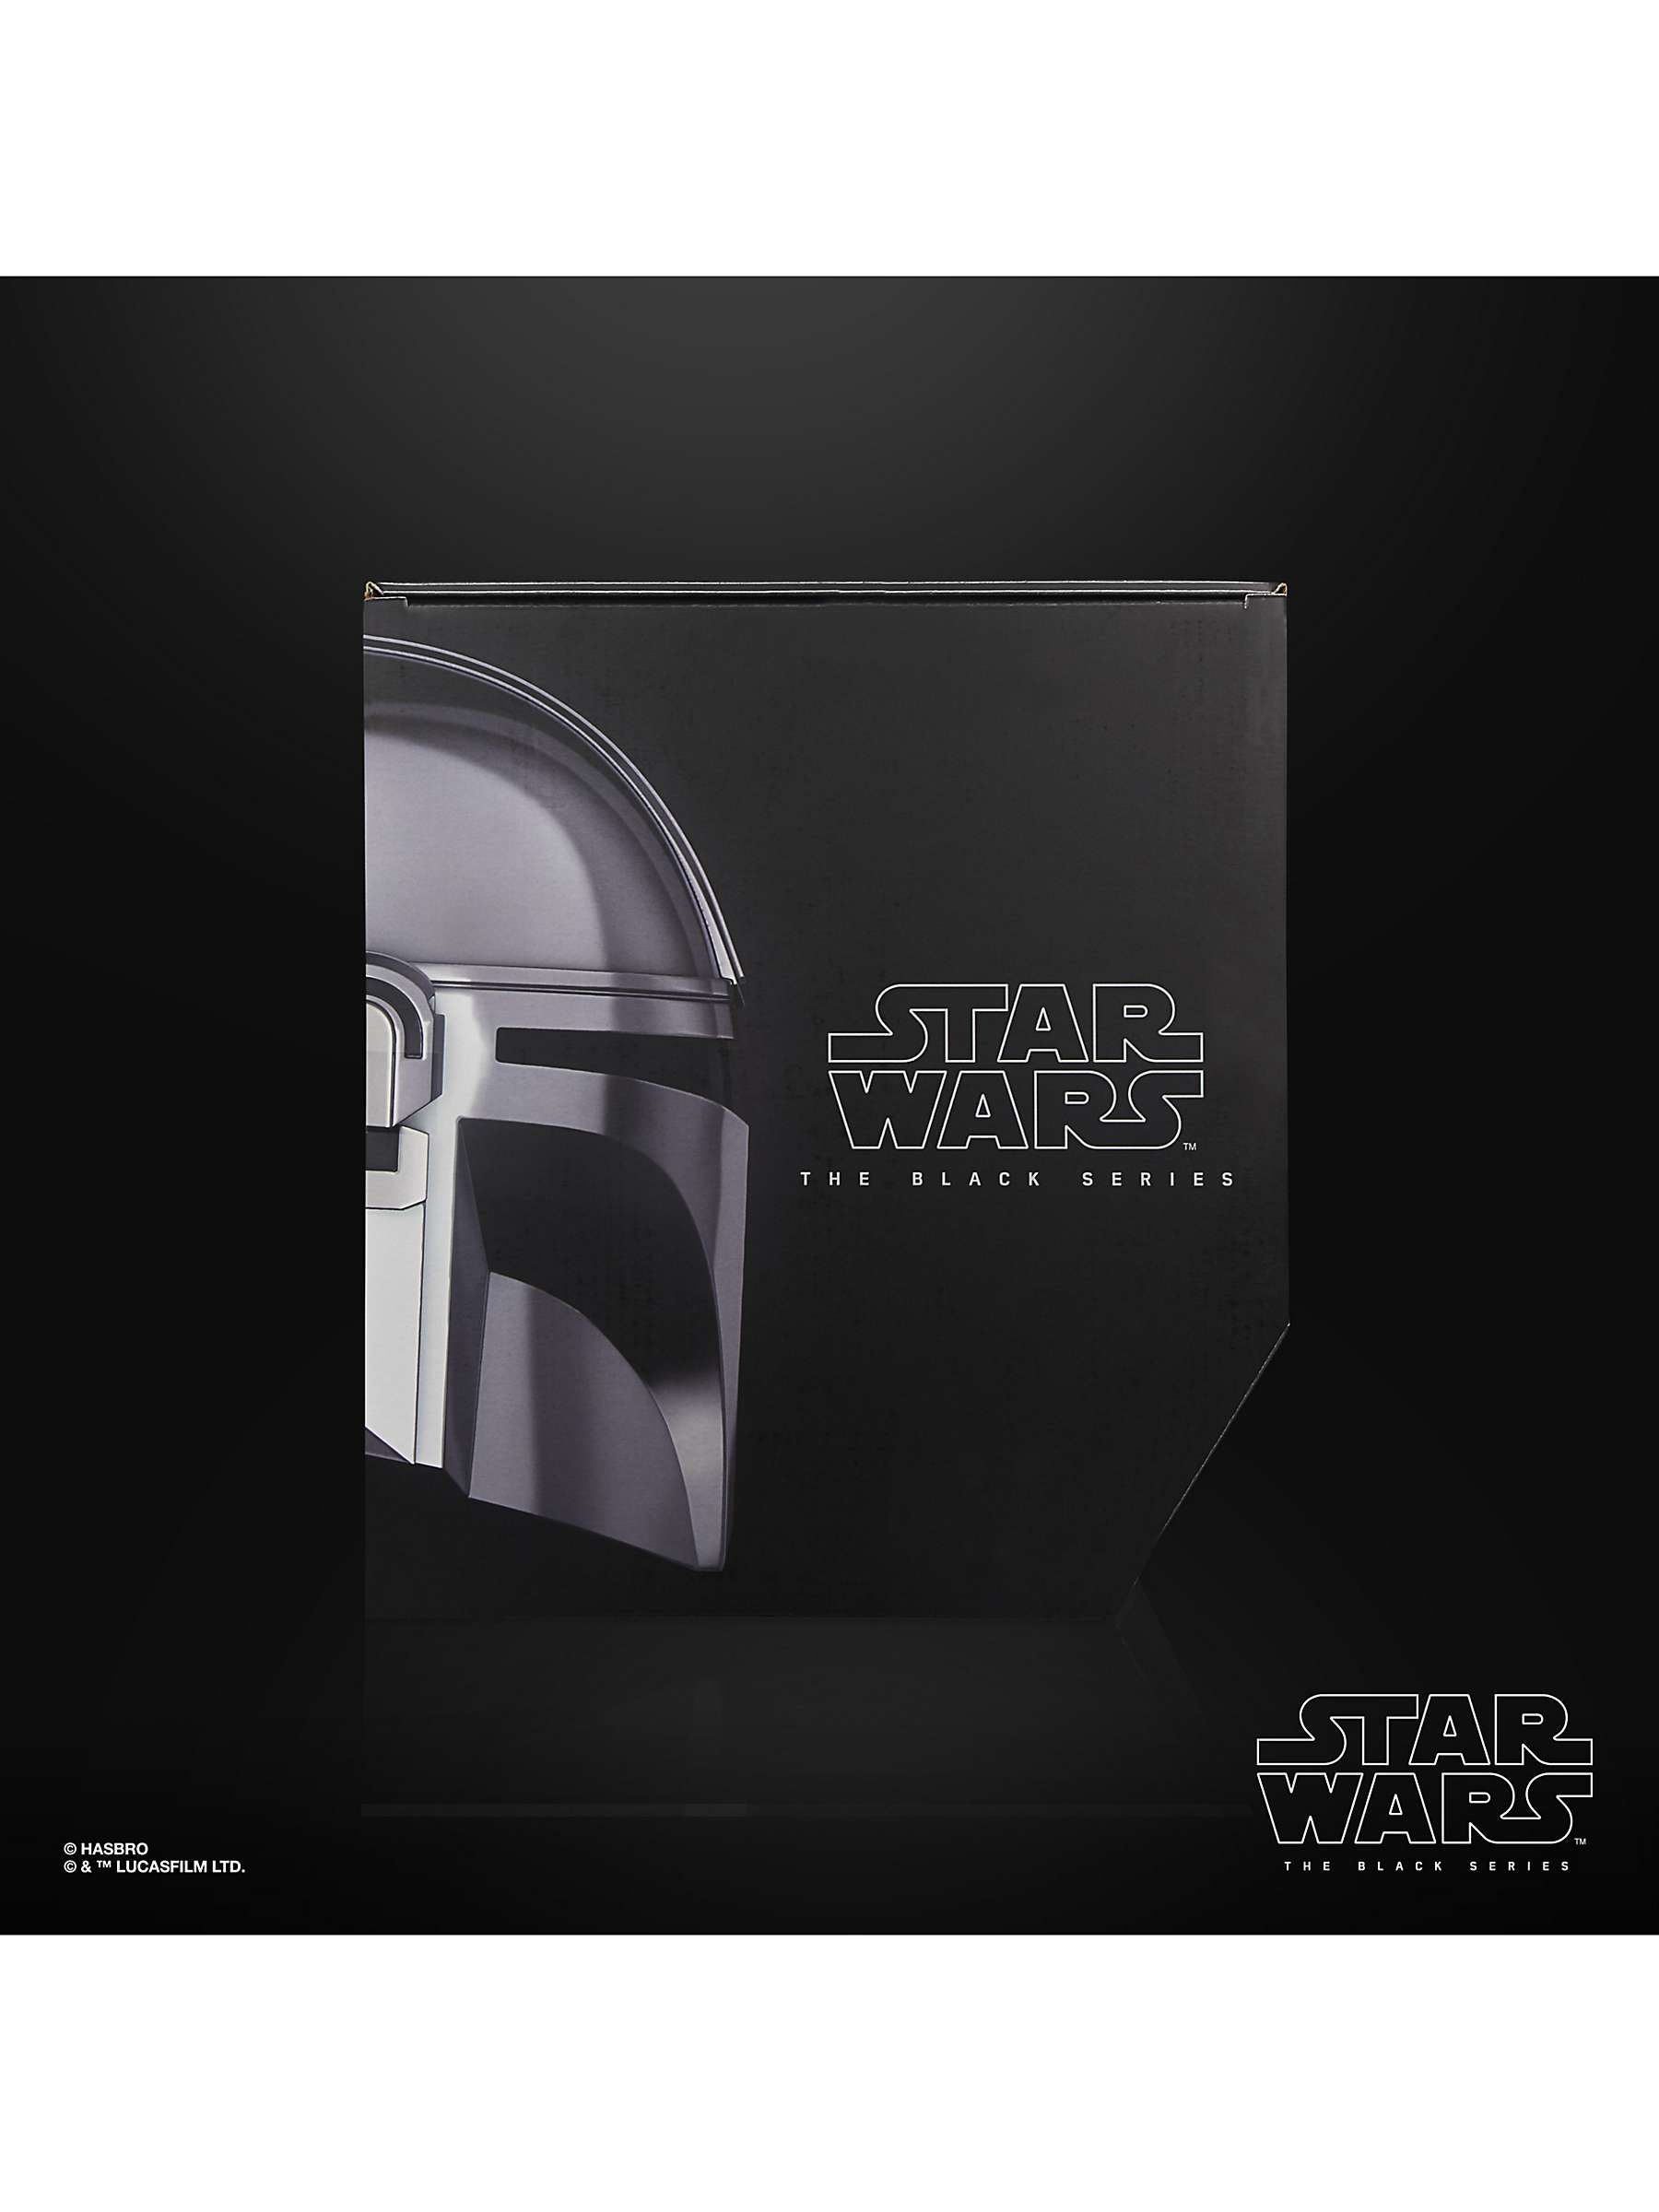 Buy Star Wars Mandalorian Helmet Online at johnlewis.com